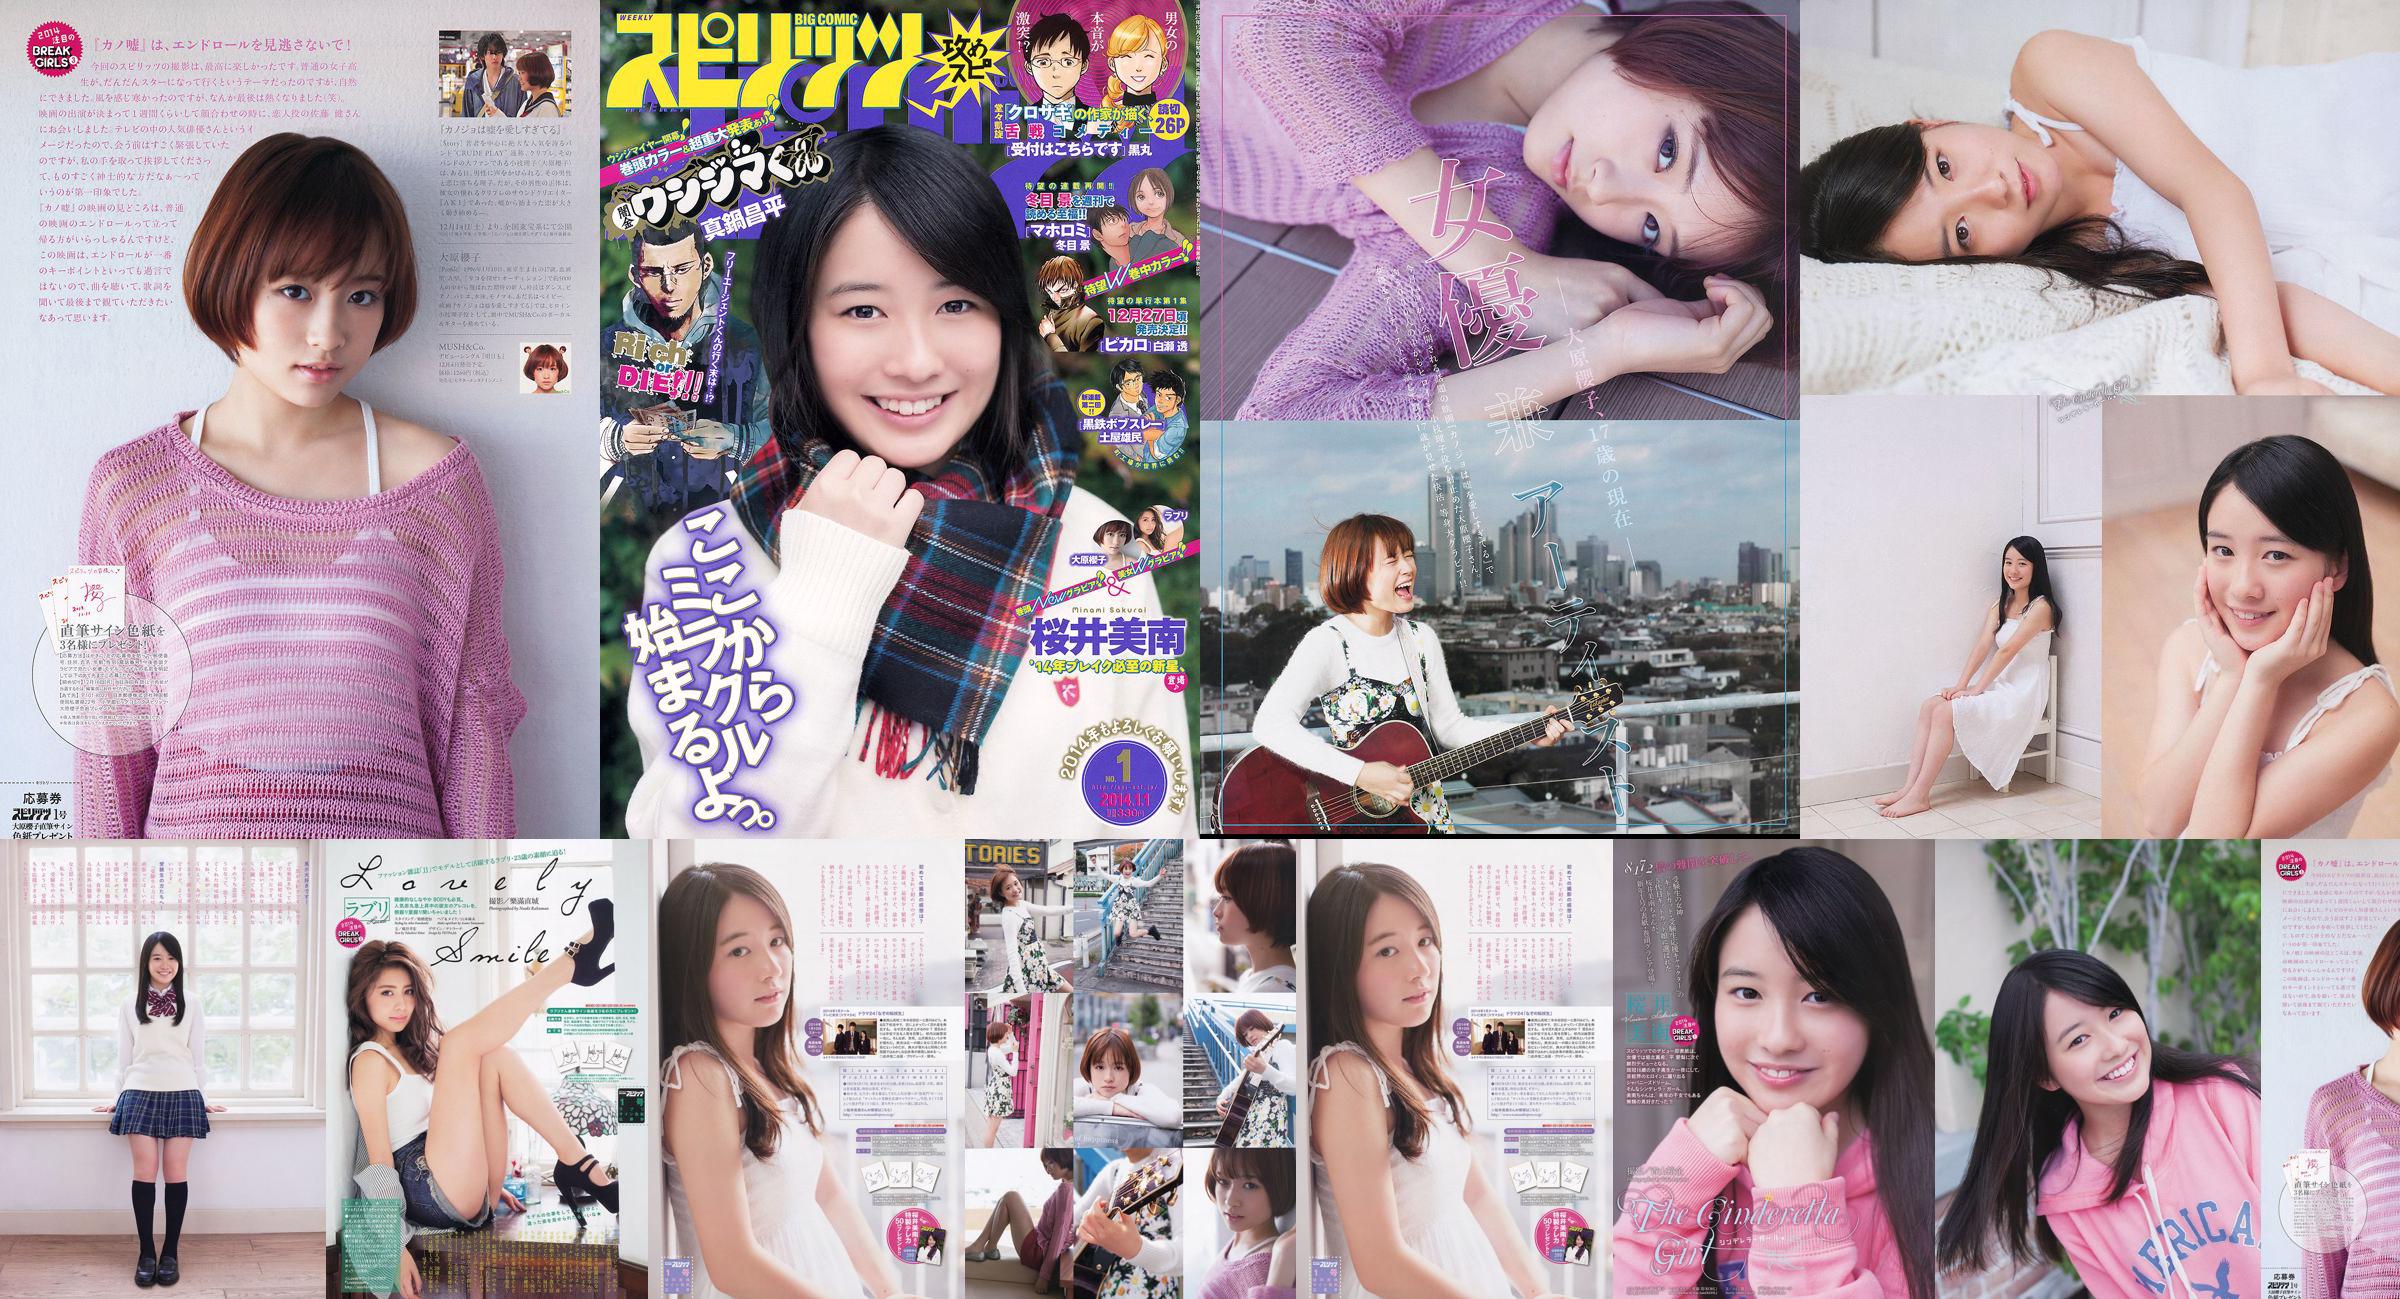 [Grands esprits de la bande dessinée hebdomadaire] Sakurai Minan Ohara Sakurako 2014 Magazine photo n ° 01 No.e7beaf Page 2